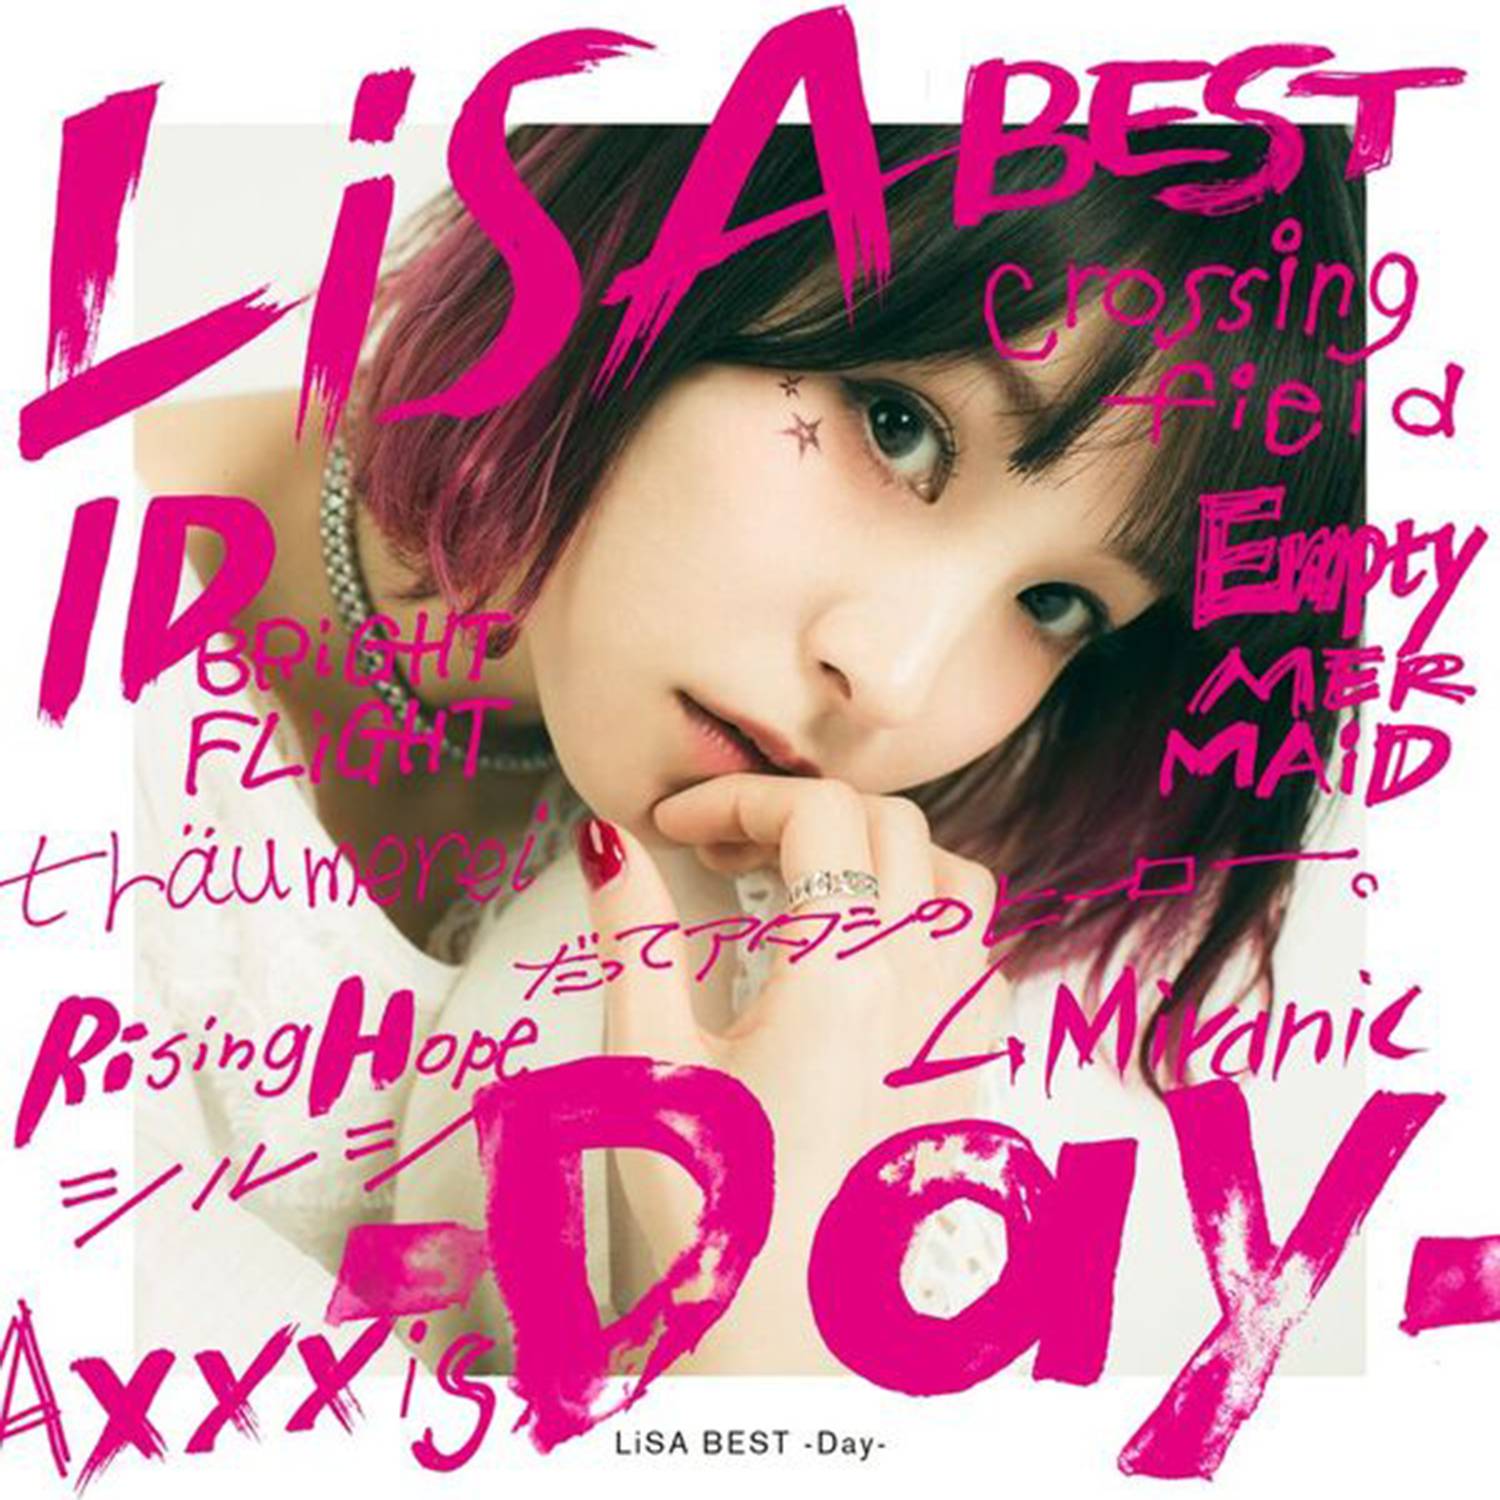 LiSA Best -Day-